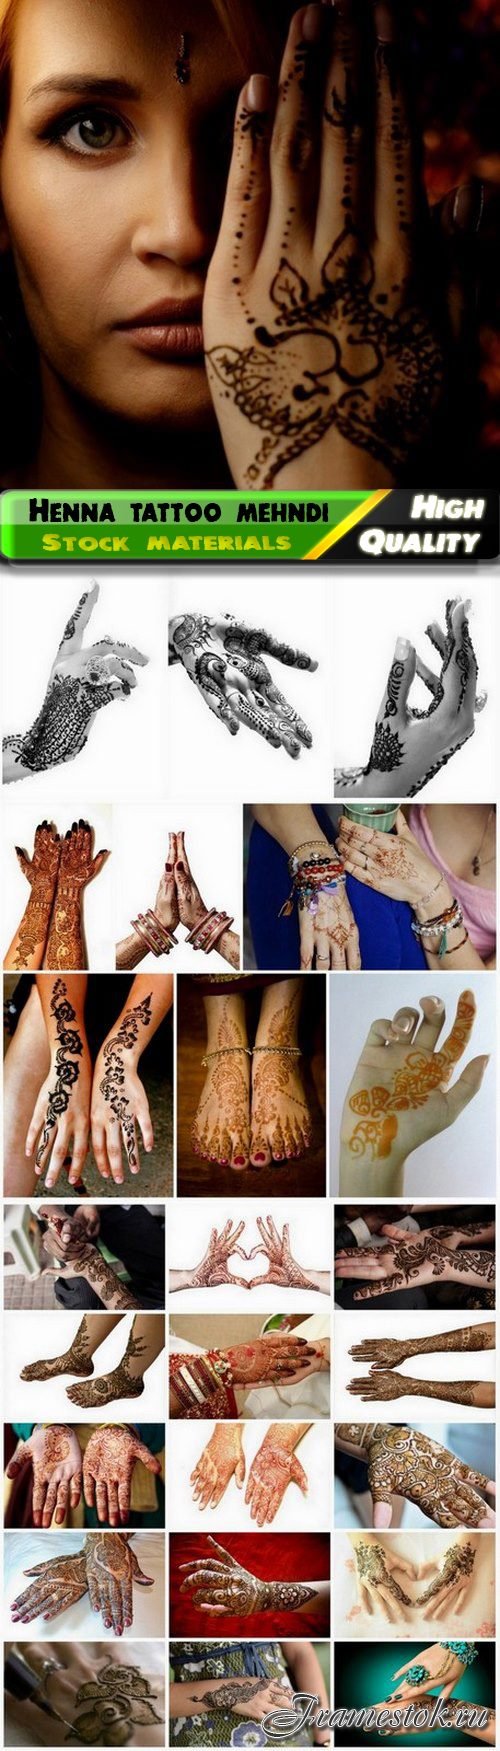 Henna tattoo of Indian mehndi style on leg and hand - 25 HQ Jpg